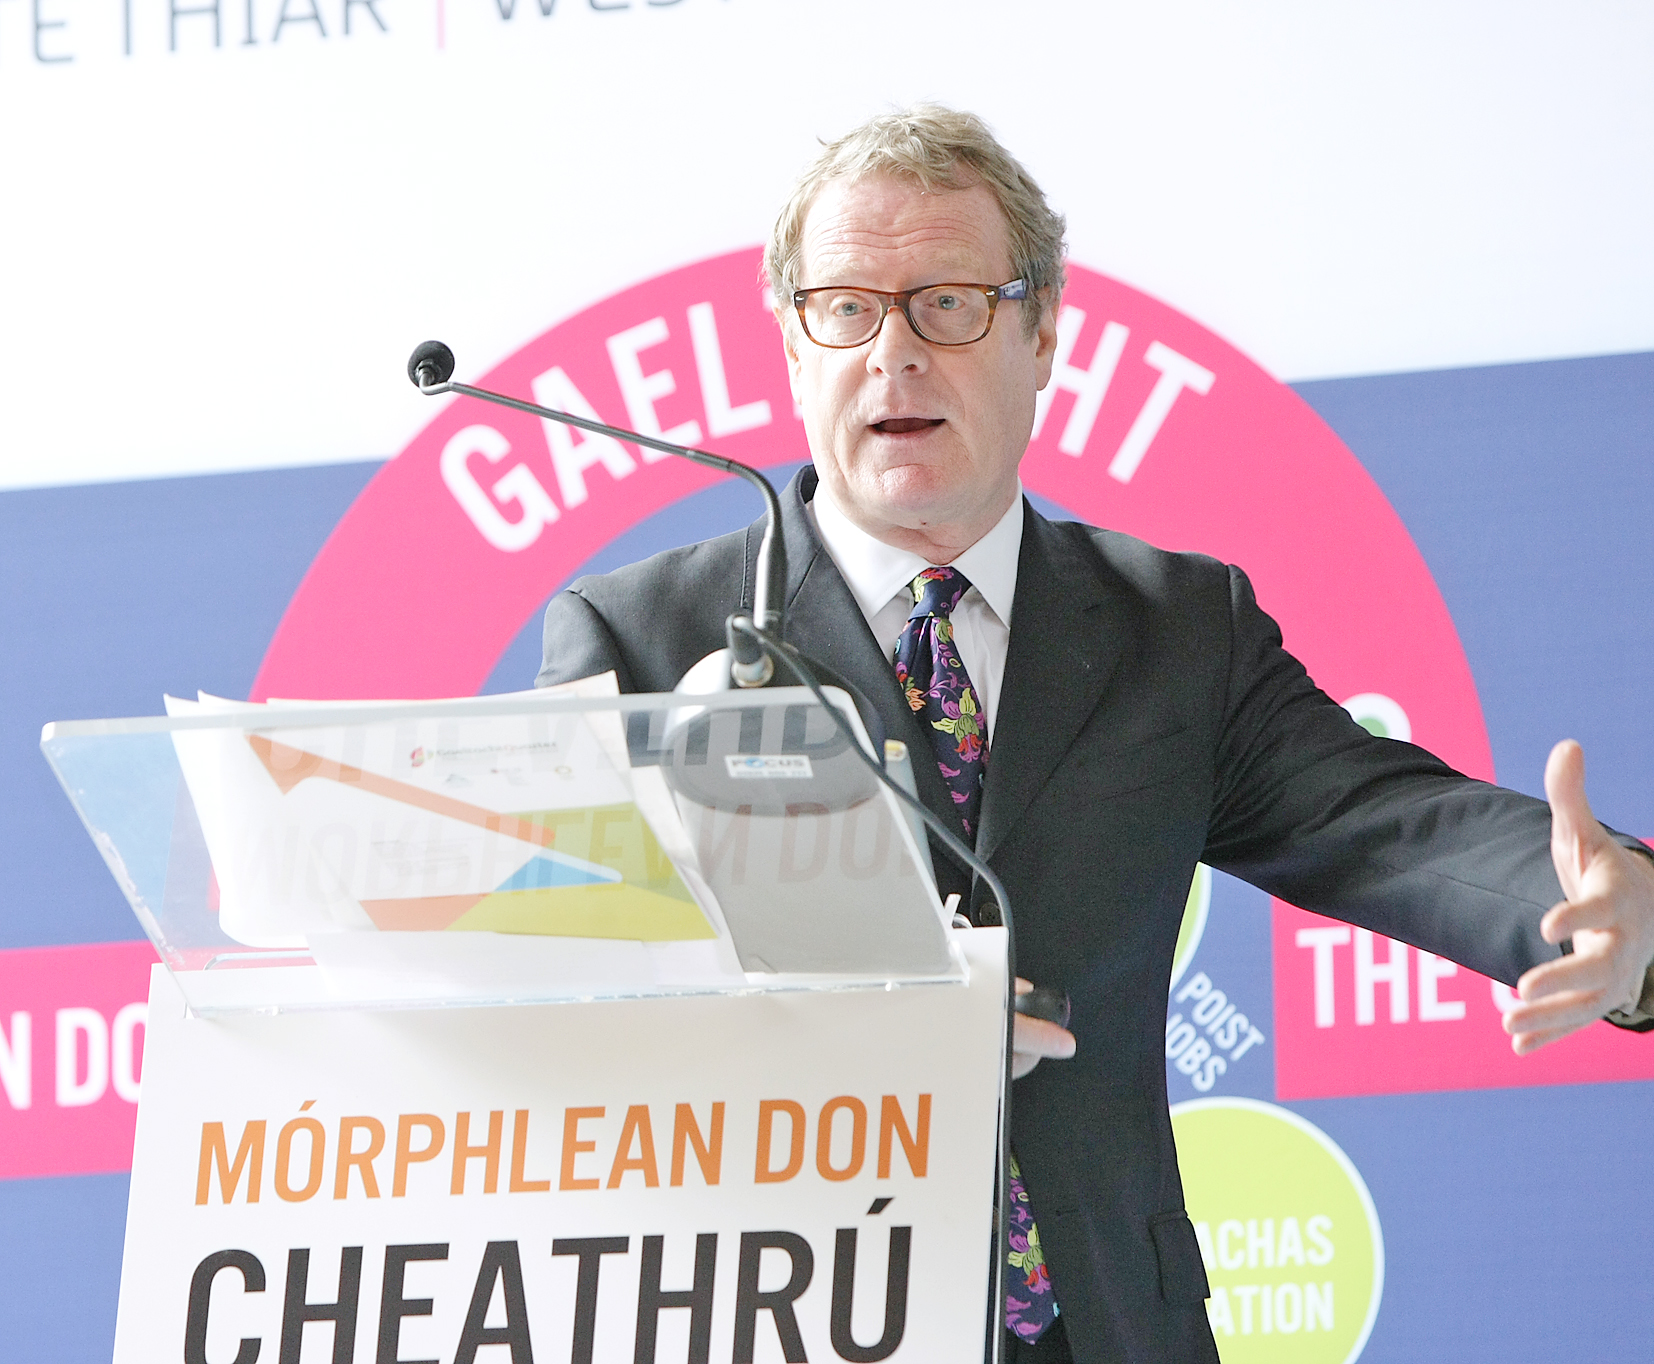 Clive Dutton launching Mórphlean don Cheathrú Ghaeltachta/the Big Plan for the Gaeltacht Quarter in September 2013 in West Belfast